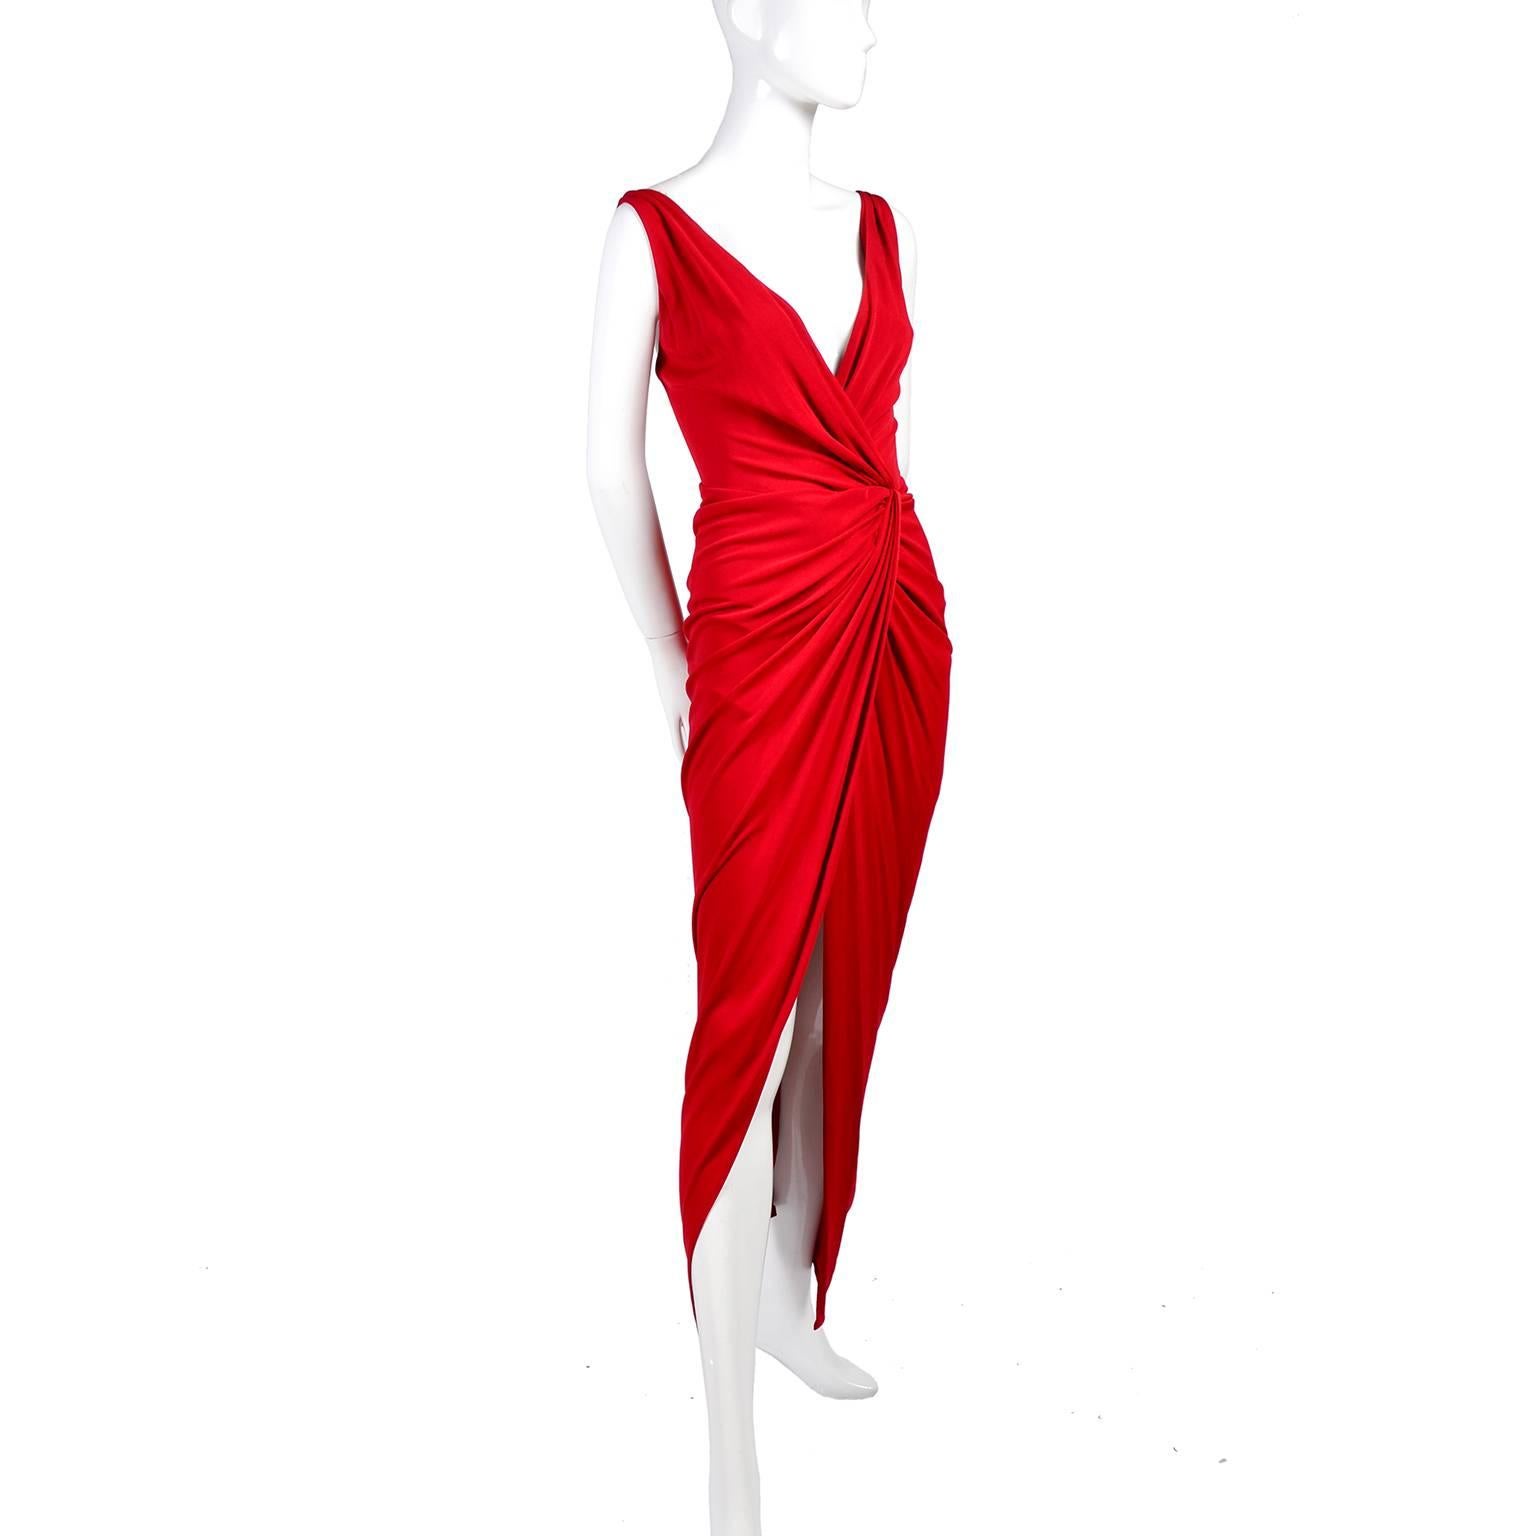 Randolph Duke Fashion: Dresses & More - 3 For Sale at 1stdibs